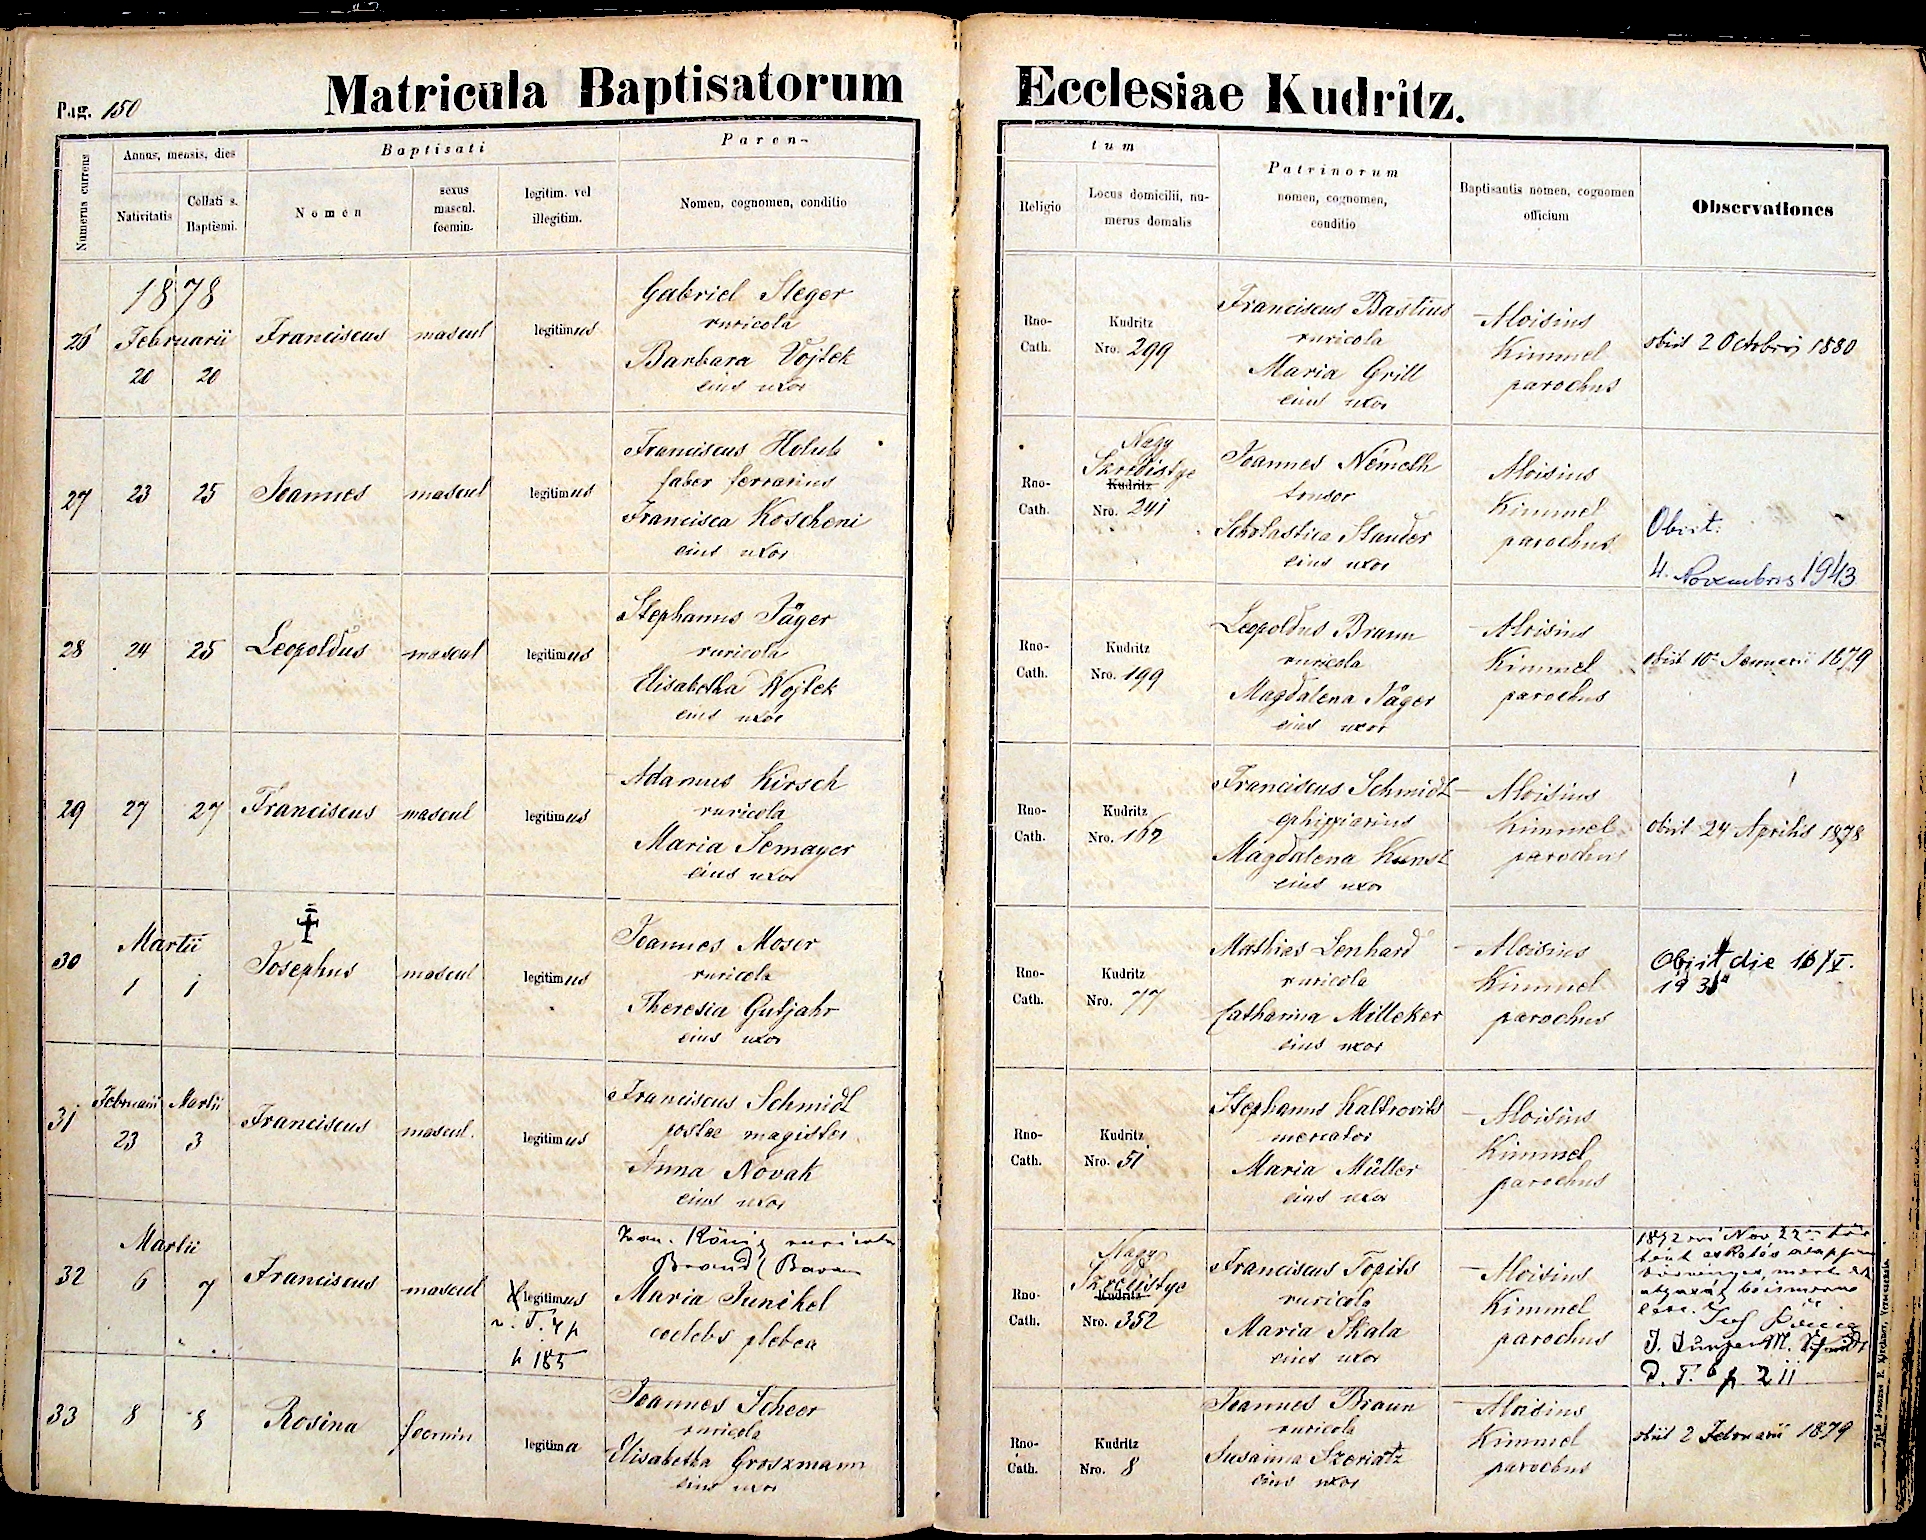 images/church_records/BIRTHS/1870-1879B/1878/150